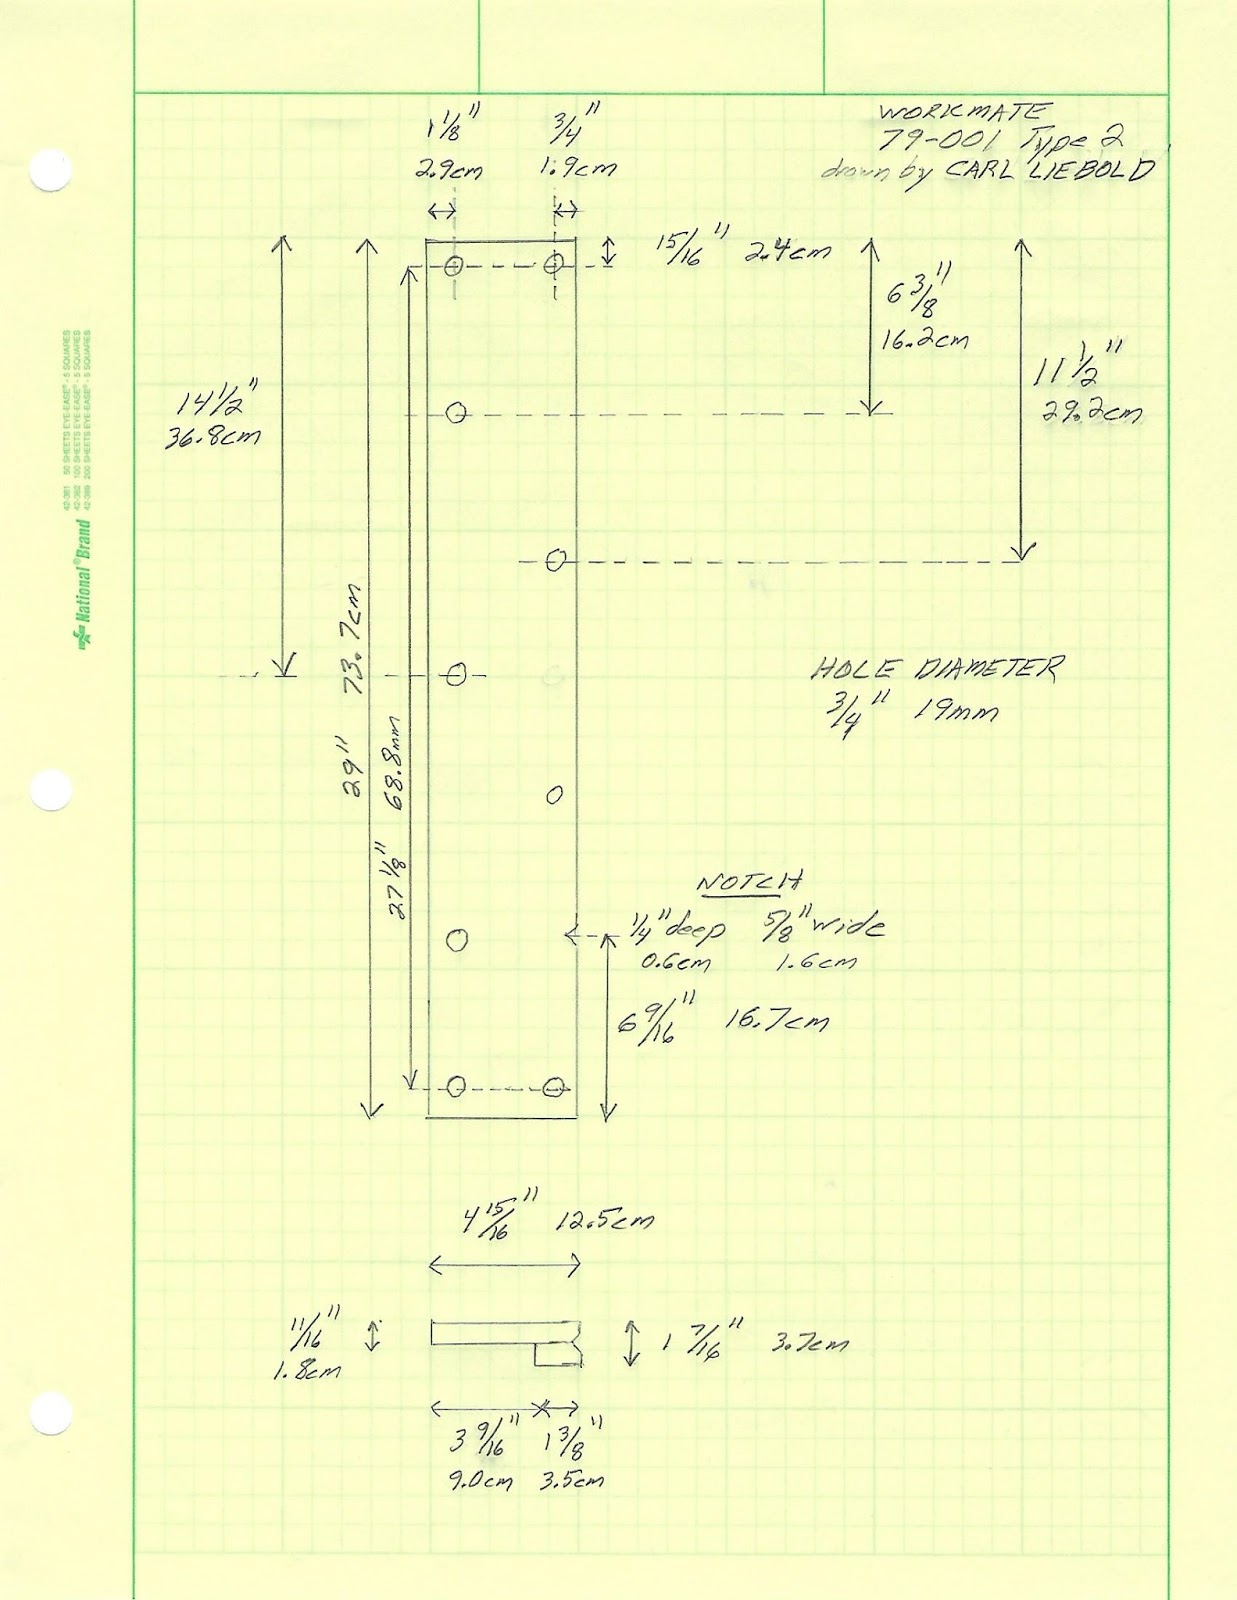 Black & Decker 79-032 Type 3 Parts Diagram for Workmate